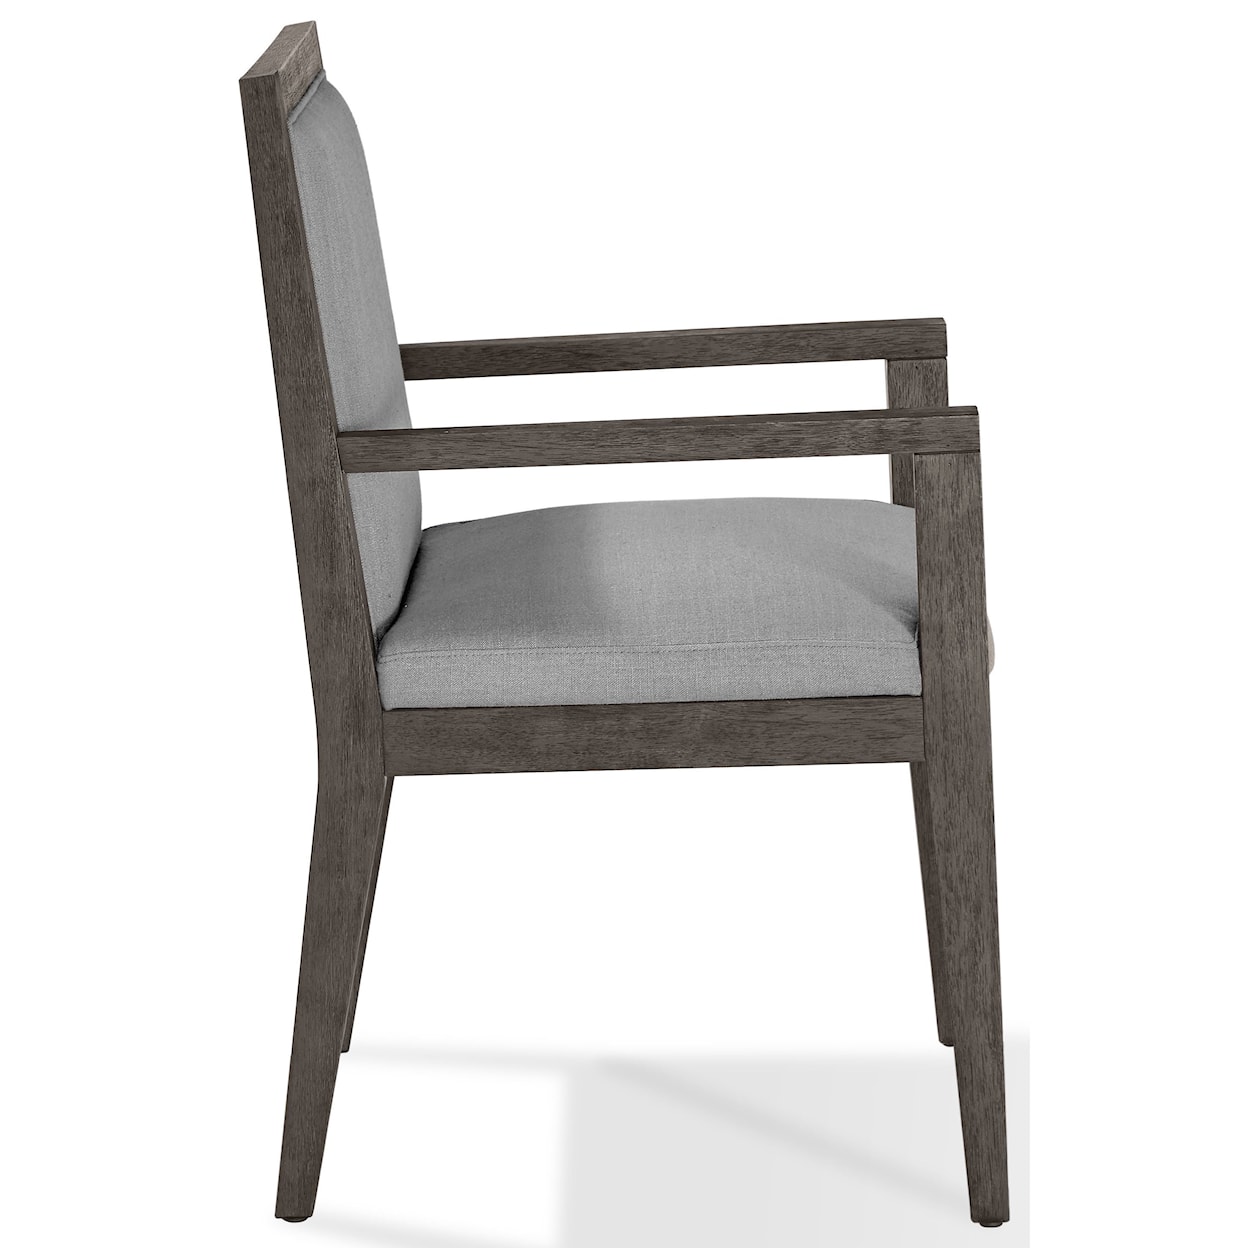 Modus International Modesto Wood Framed Arm Chair in French Roast